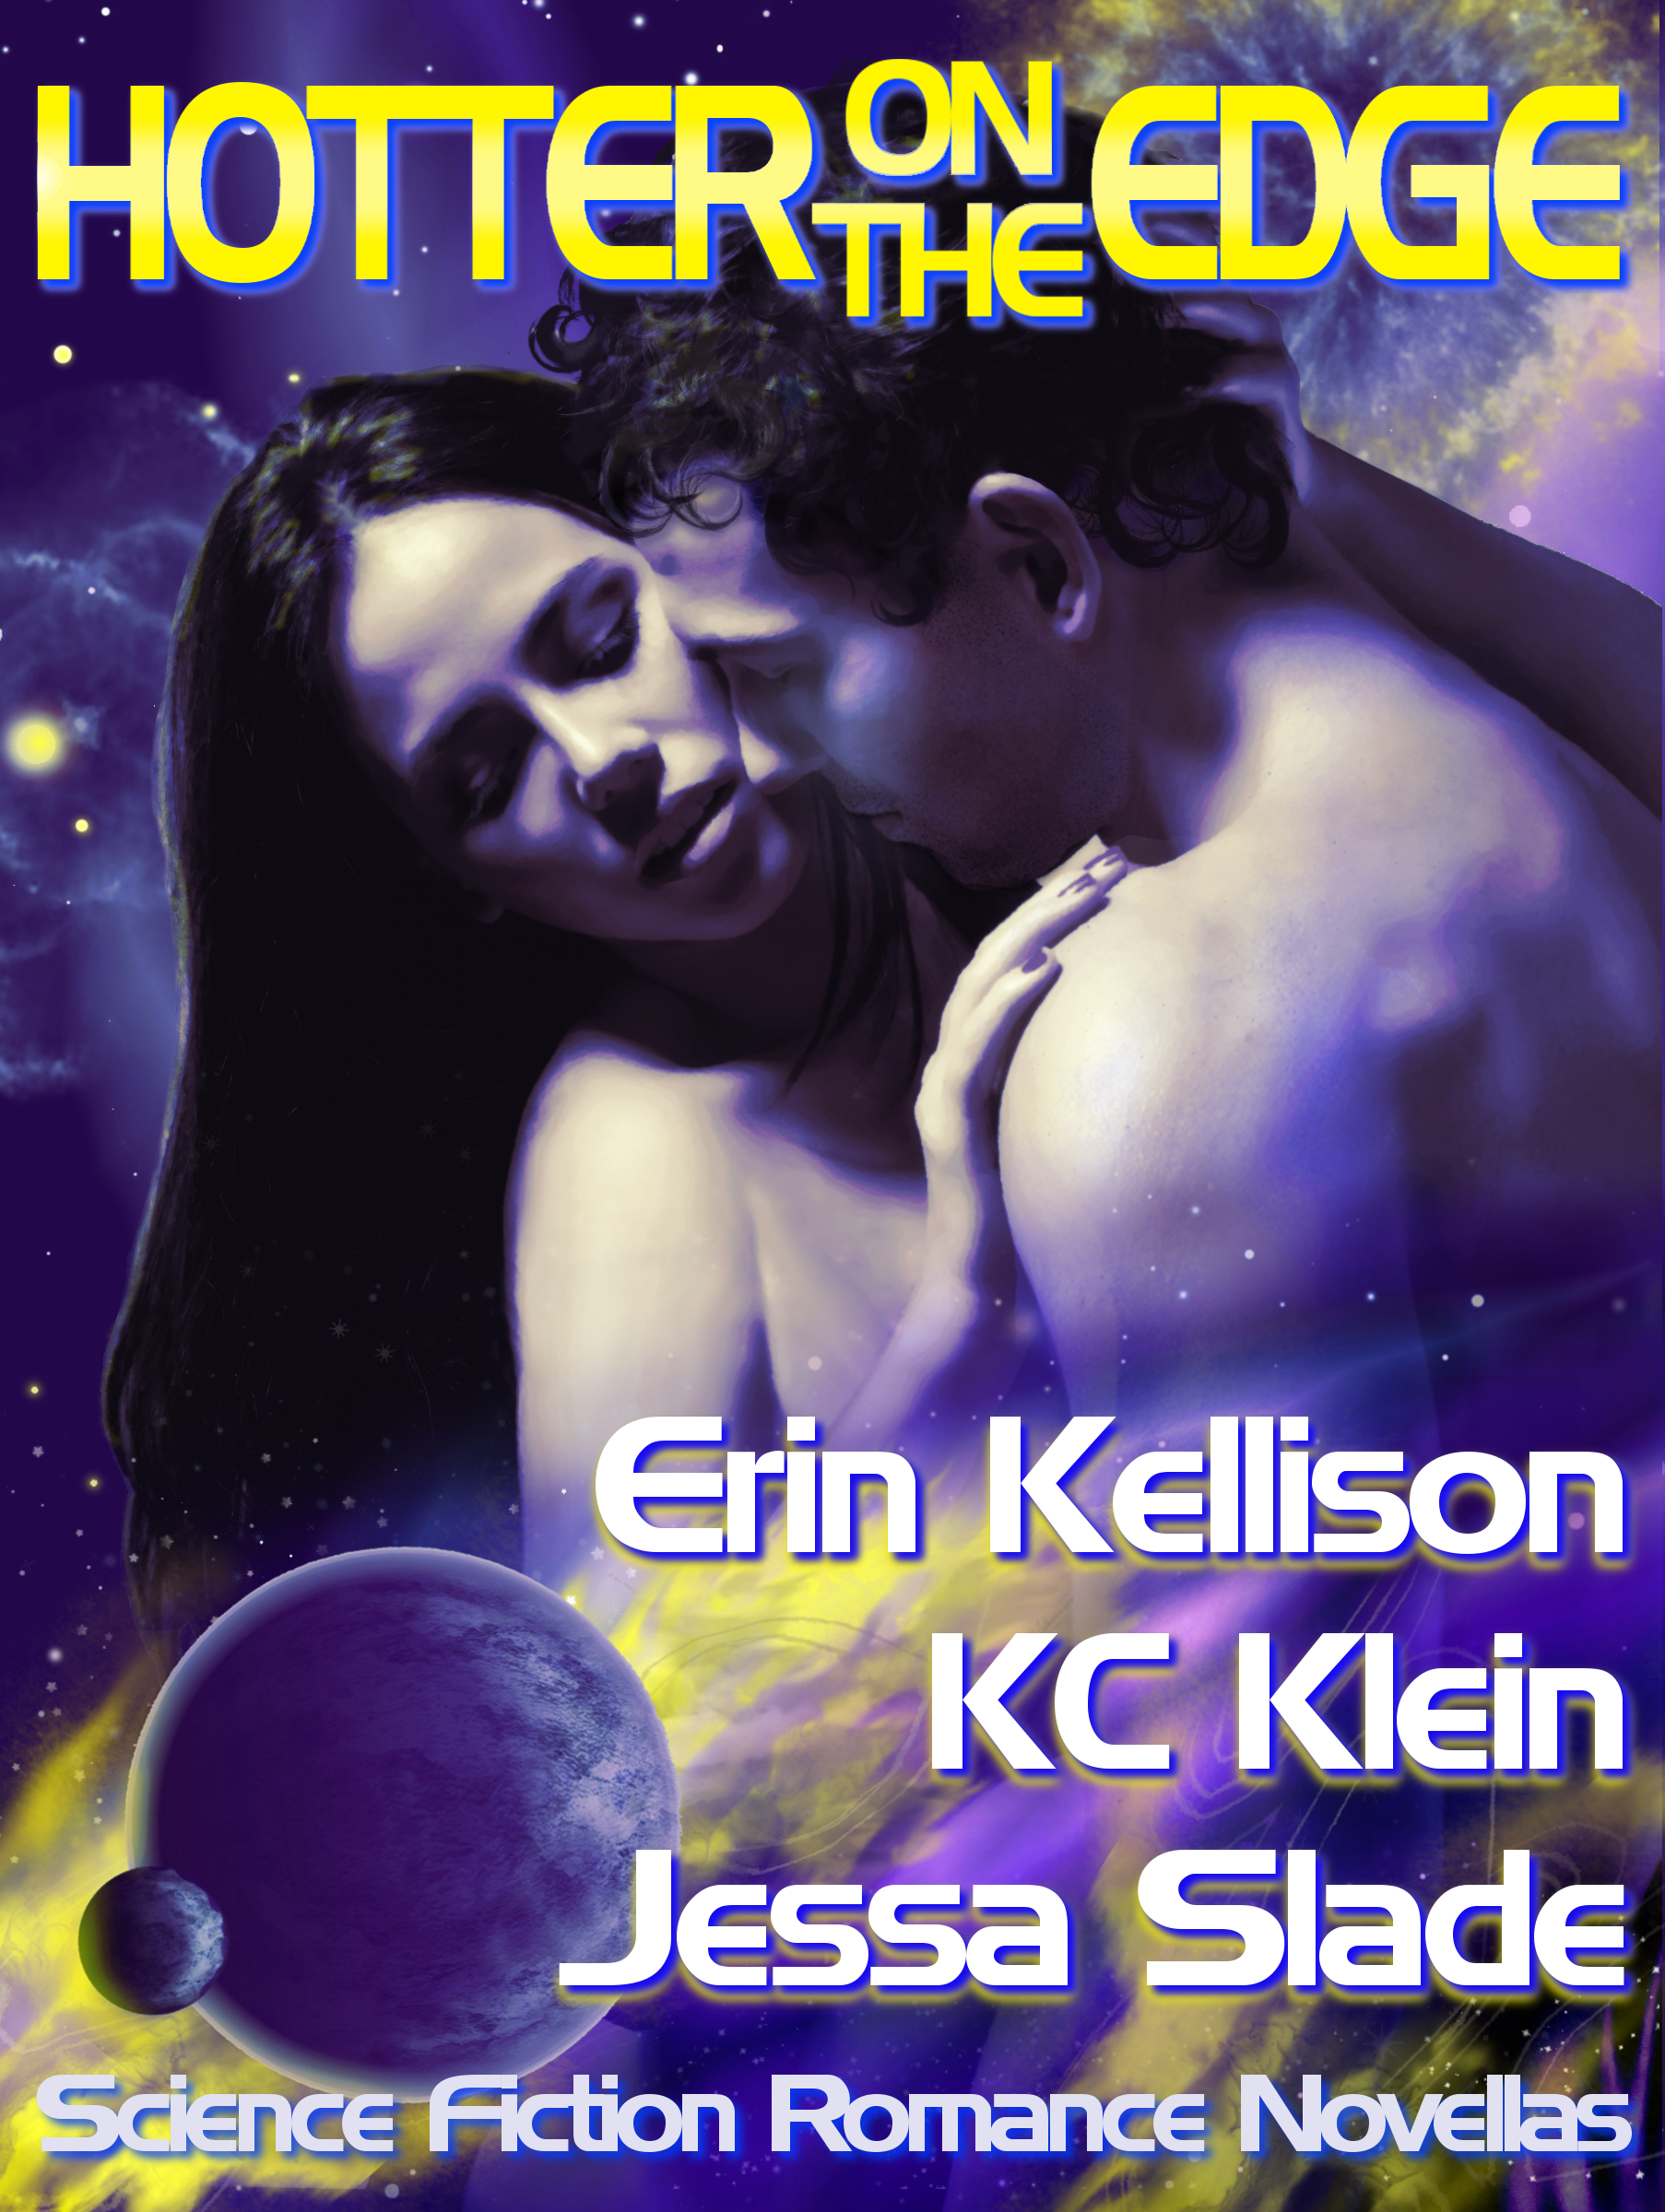 Hotter on The Edge Series, Sci-fi novella, KC Klein, To Buy A Wife, Lake, Hudson, Dark Future Prequel